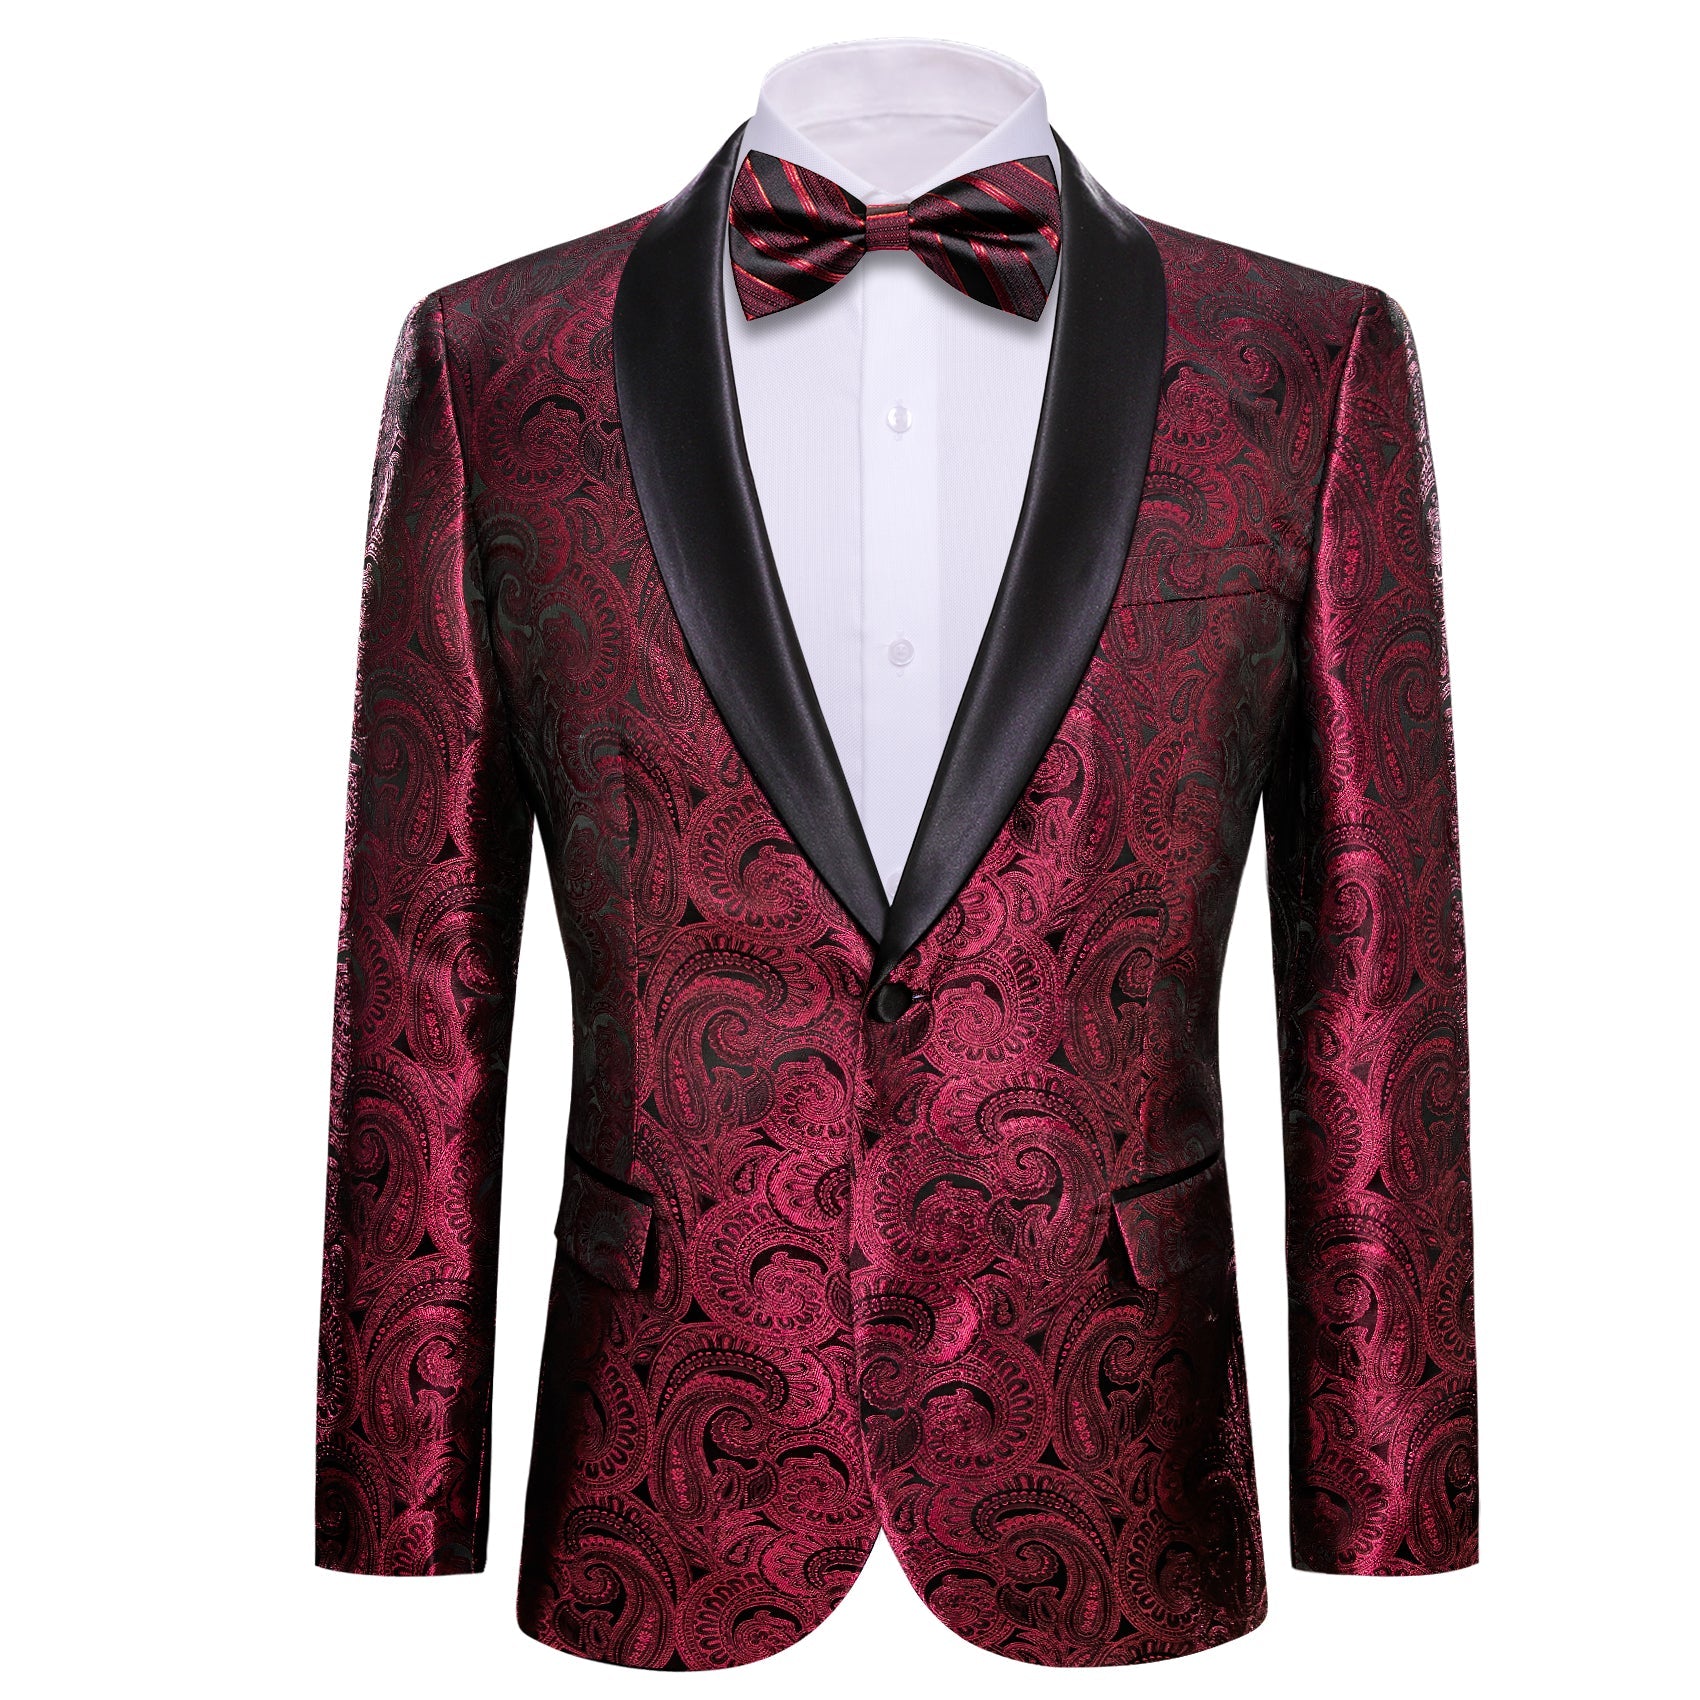 Burgundy and Black Paisley Tuxedo Jacket – Sophisticated Gentlemen